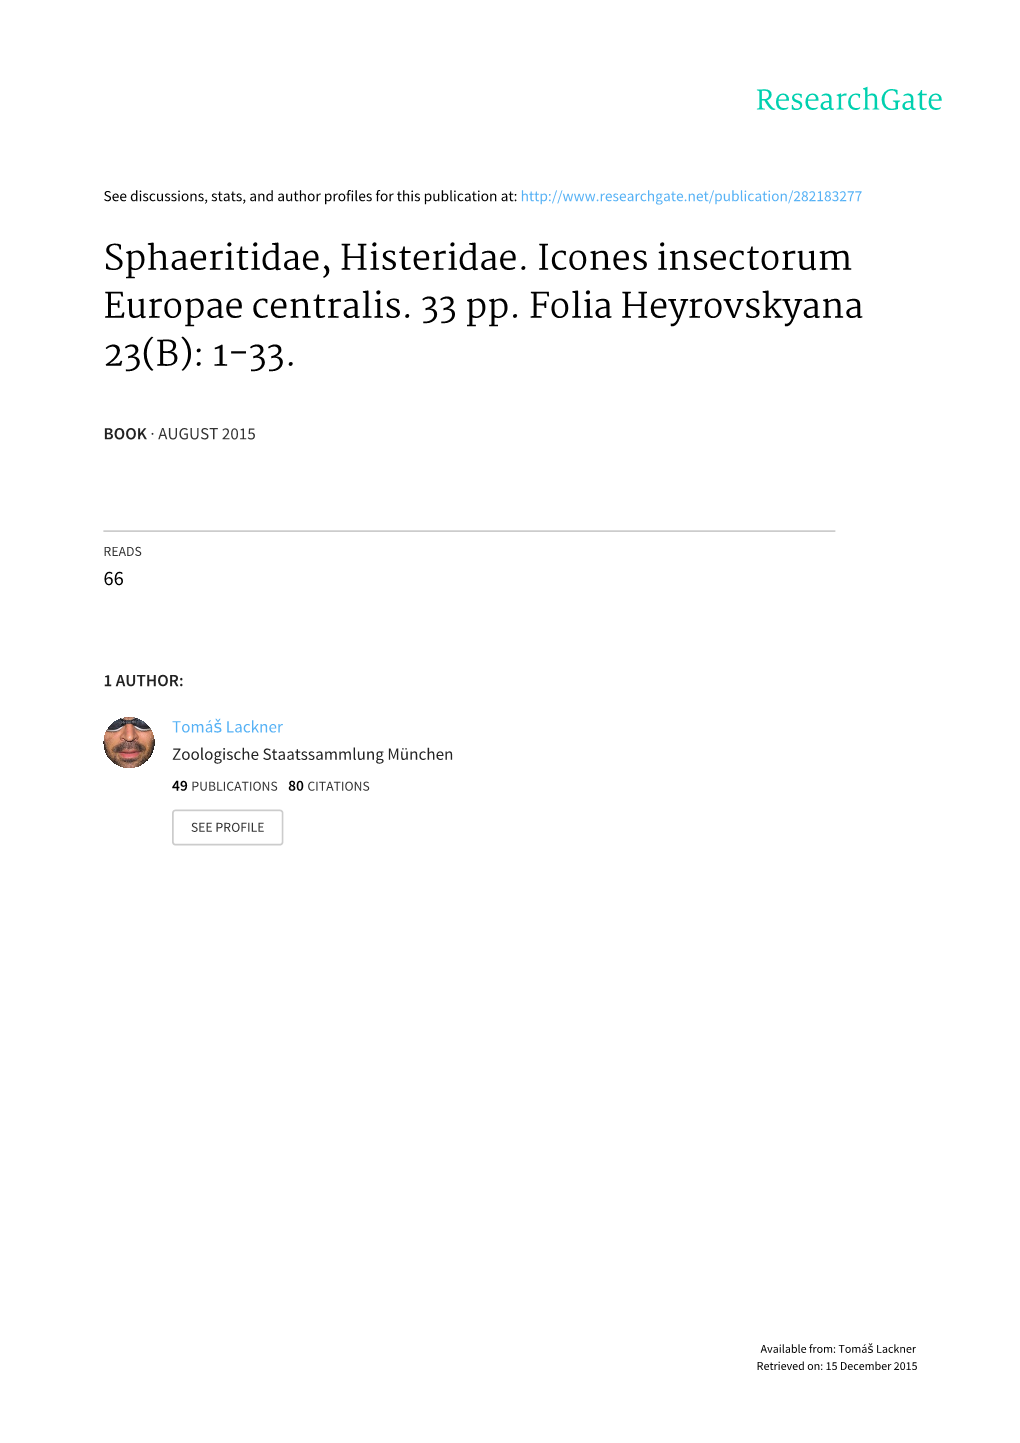 Sphaeritidae, Histeridae. Icones Insectorum Europae Centralis. 33 Pp